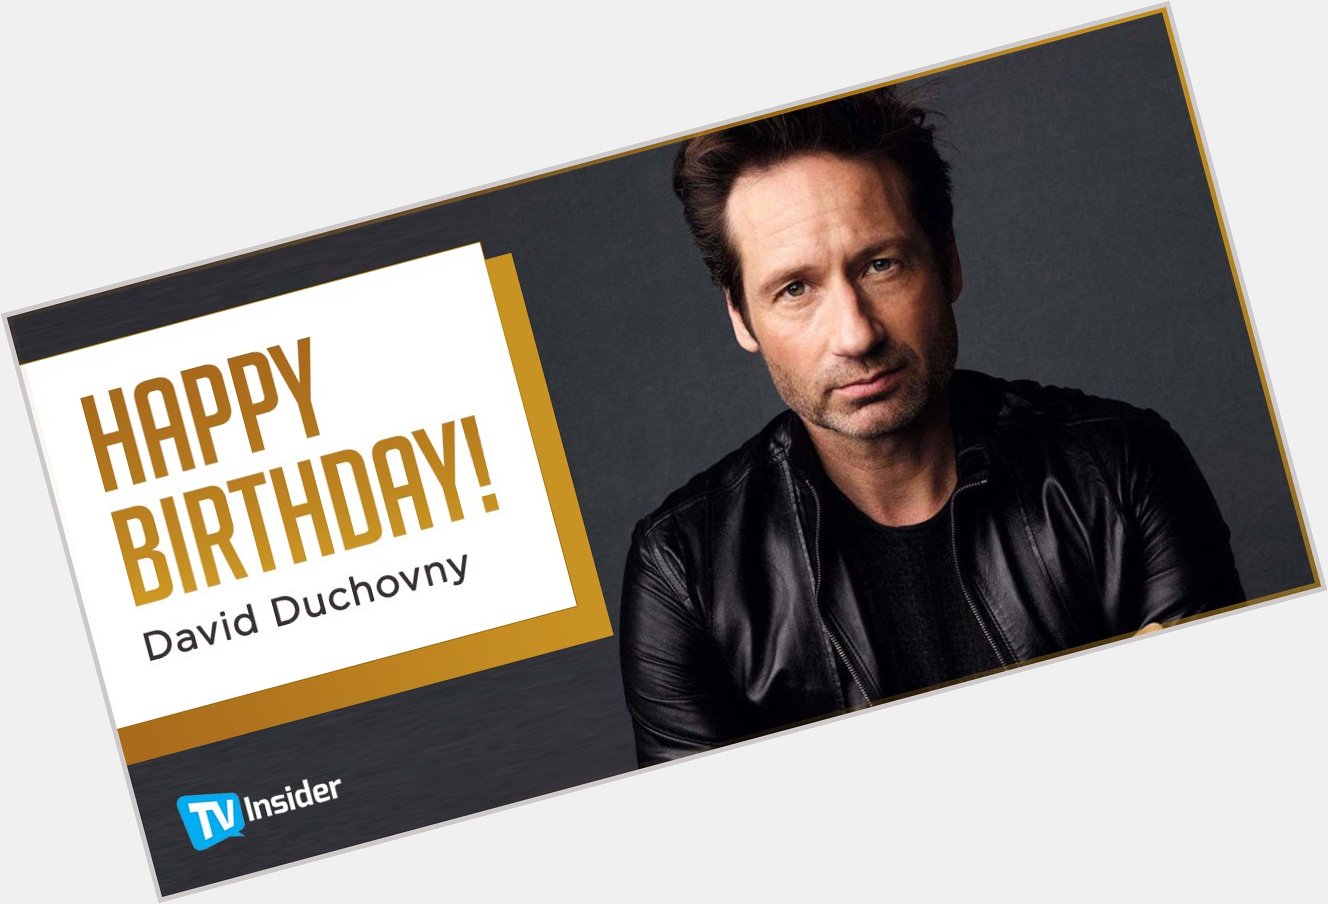 Mulder has reason to celebrate today. Happy birthday, David Duchovny. 